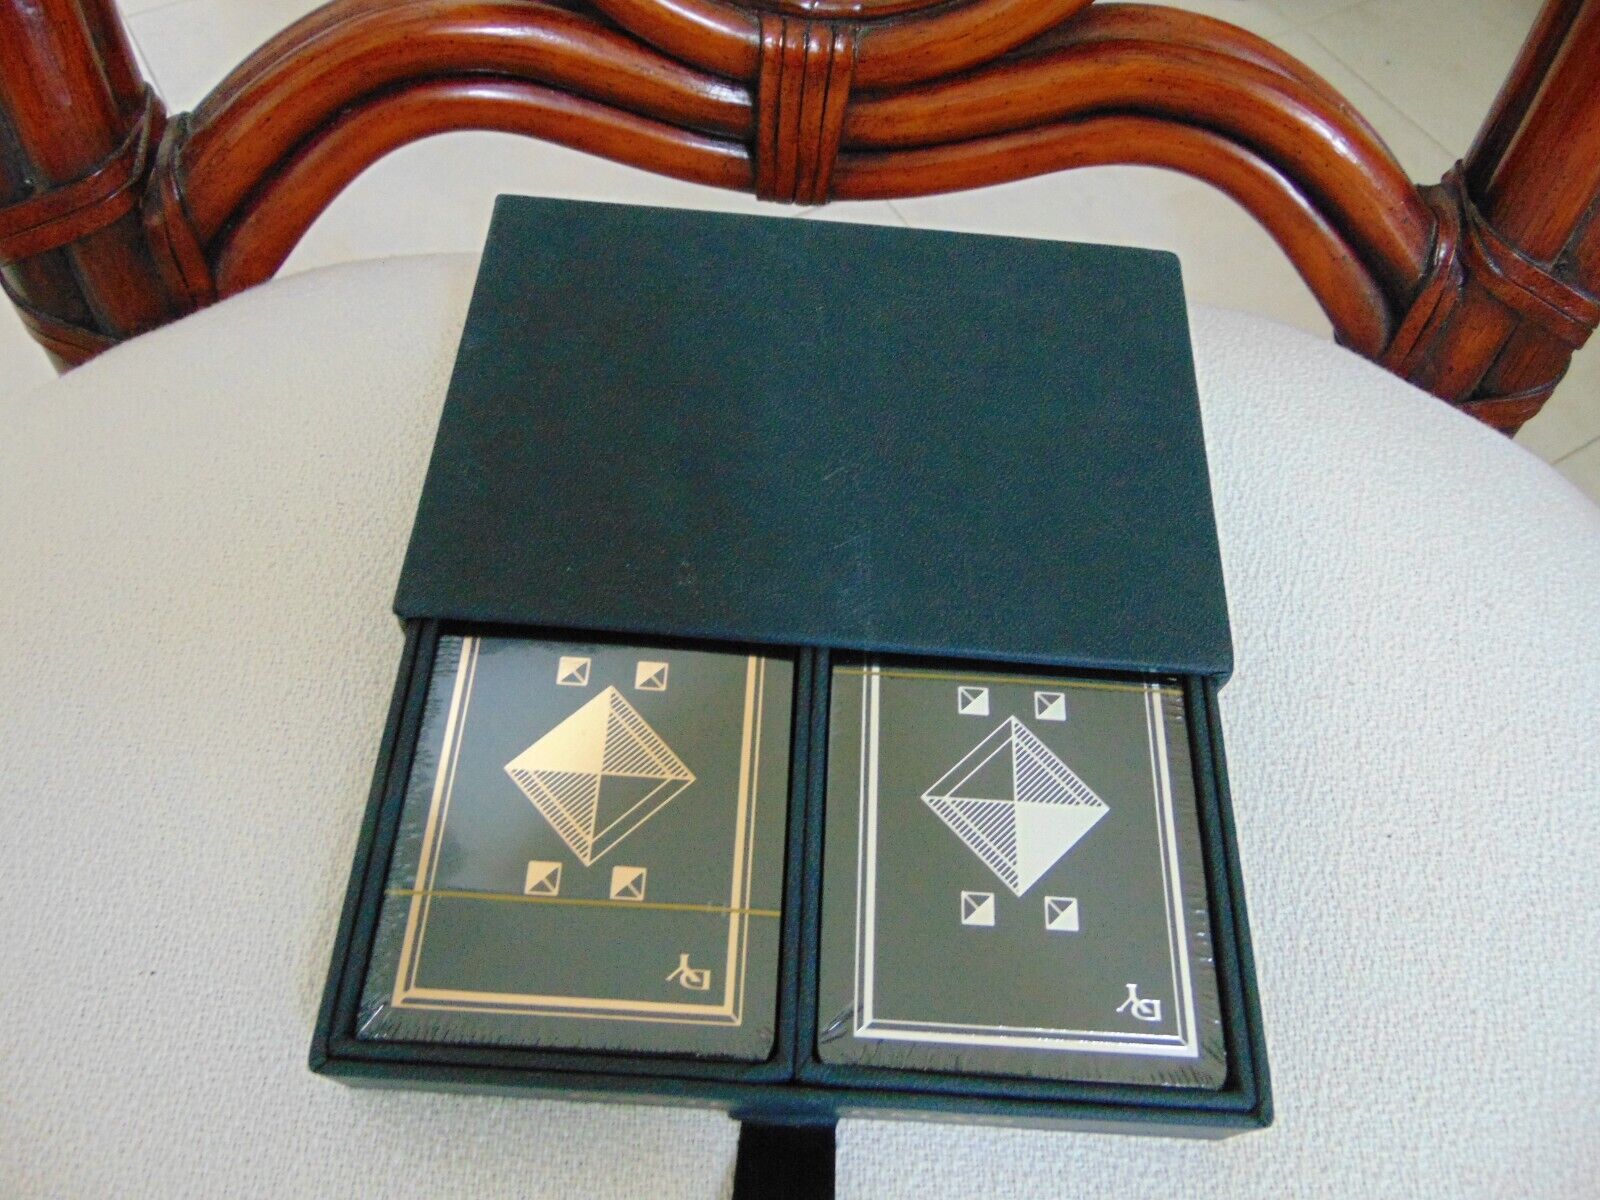 DAVID YURMAN NEW SET OF 2 COMPLETE DECKS PLAYING CARDS:1 SILVER & 1 GOLD W BLACK